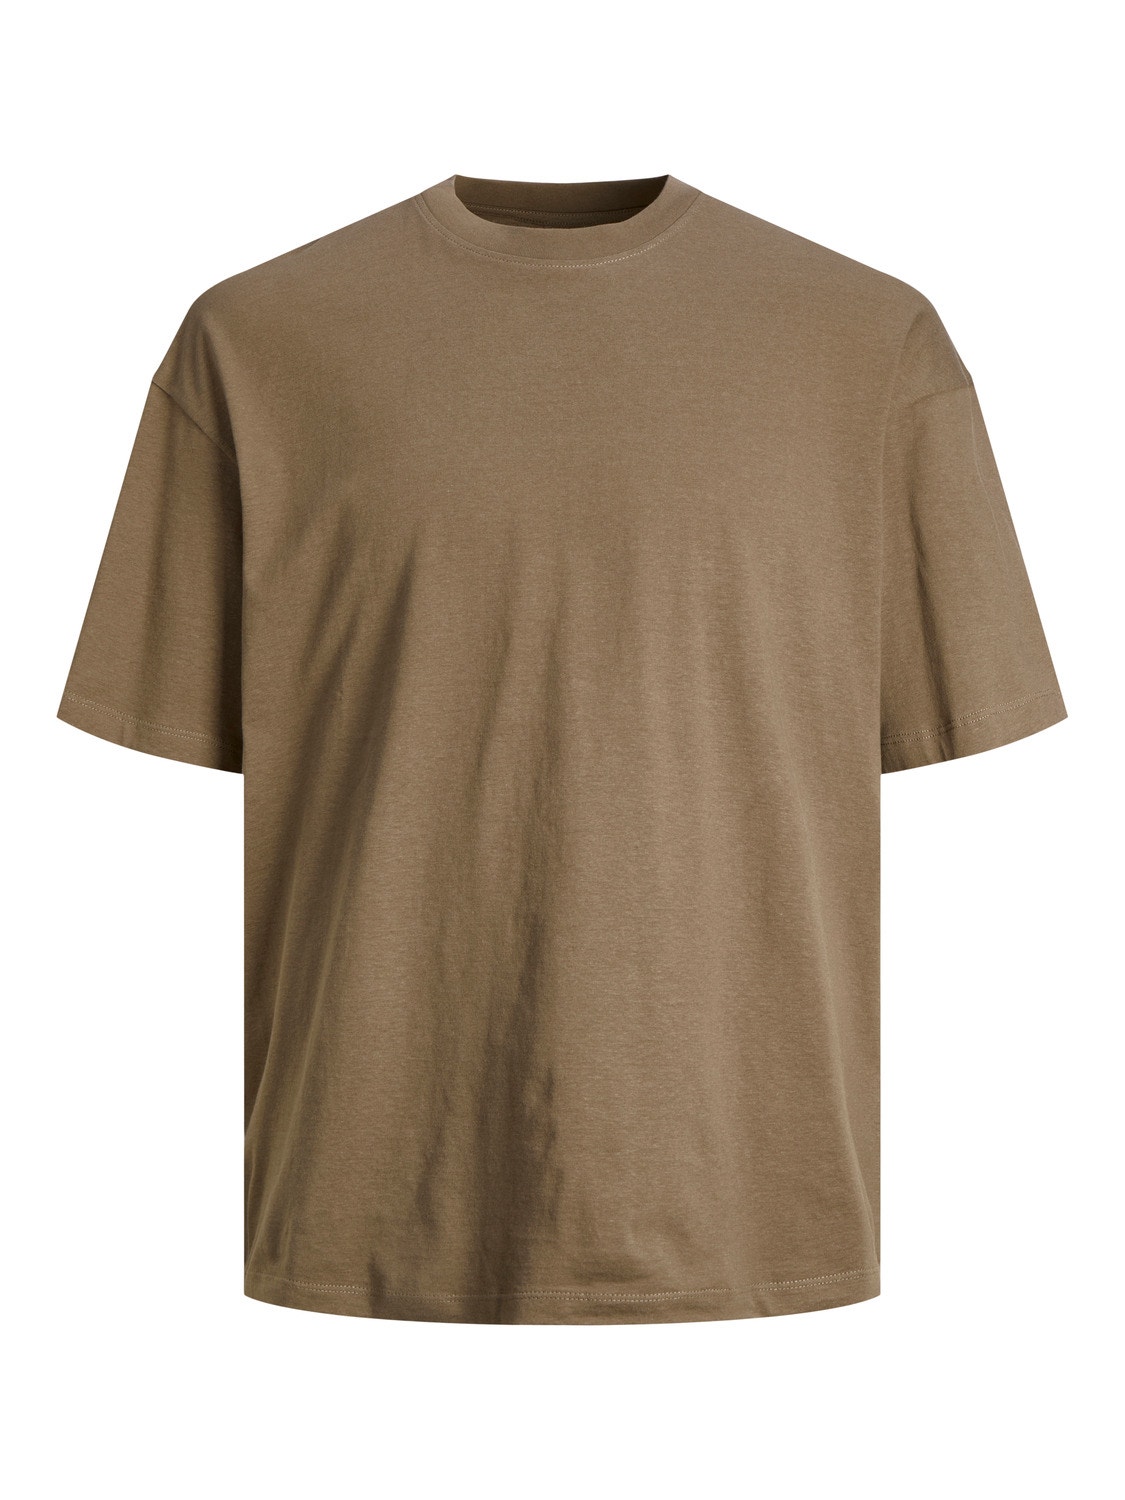 Jack & Jones Plain Crew neck T-shirt -Bungee Cord - 12249319